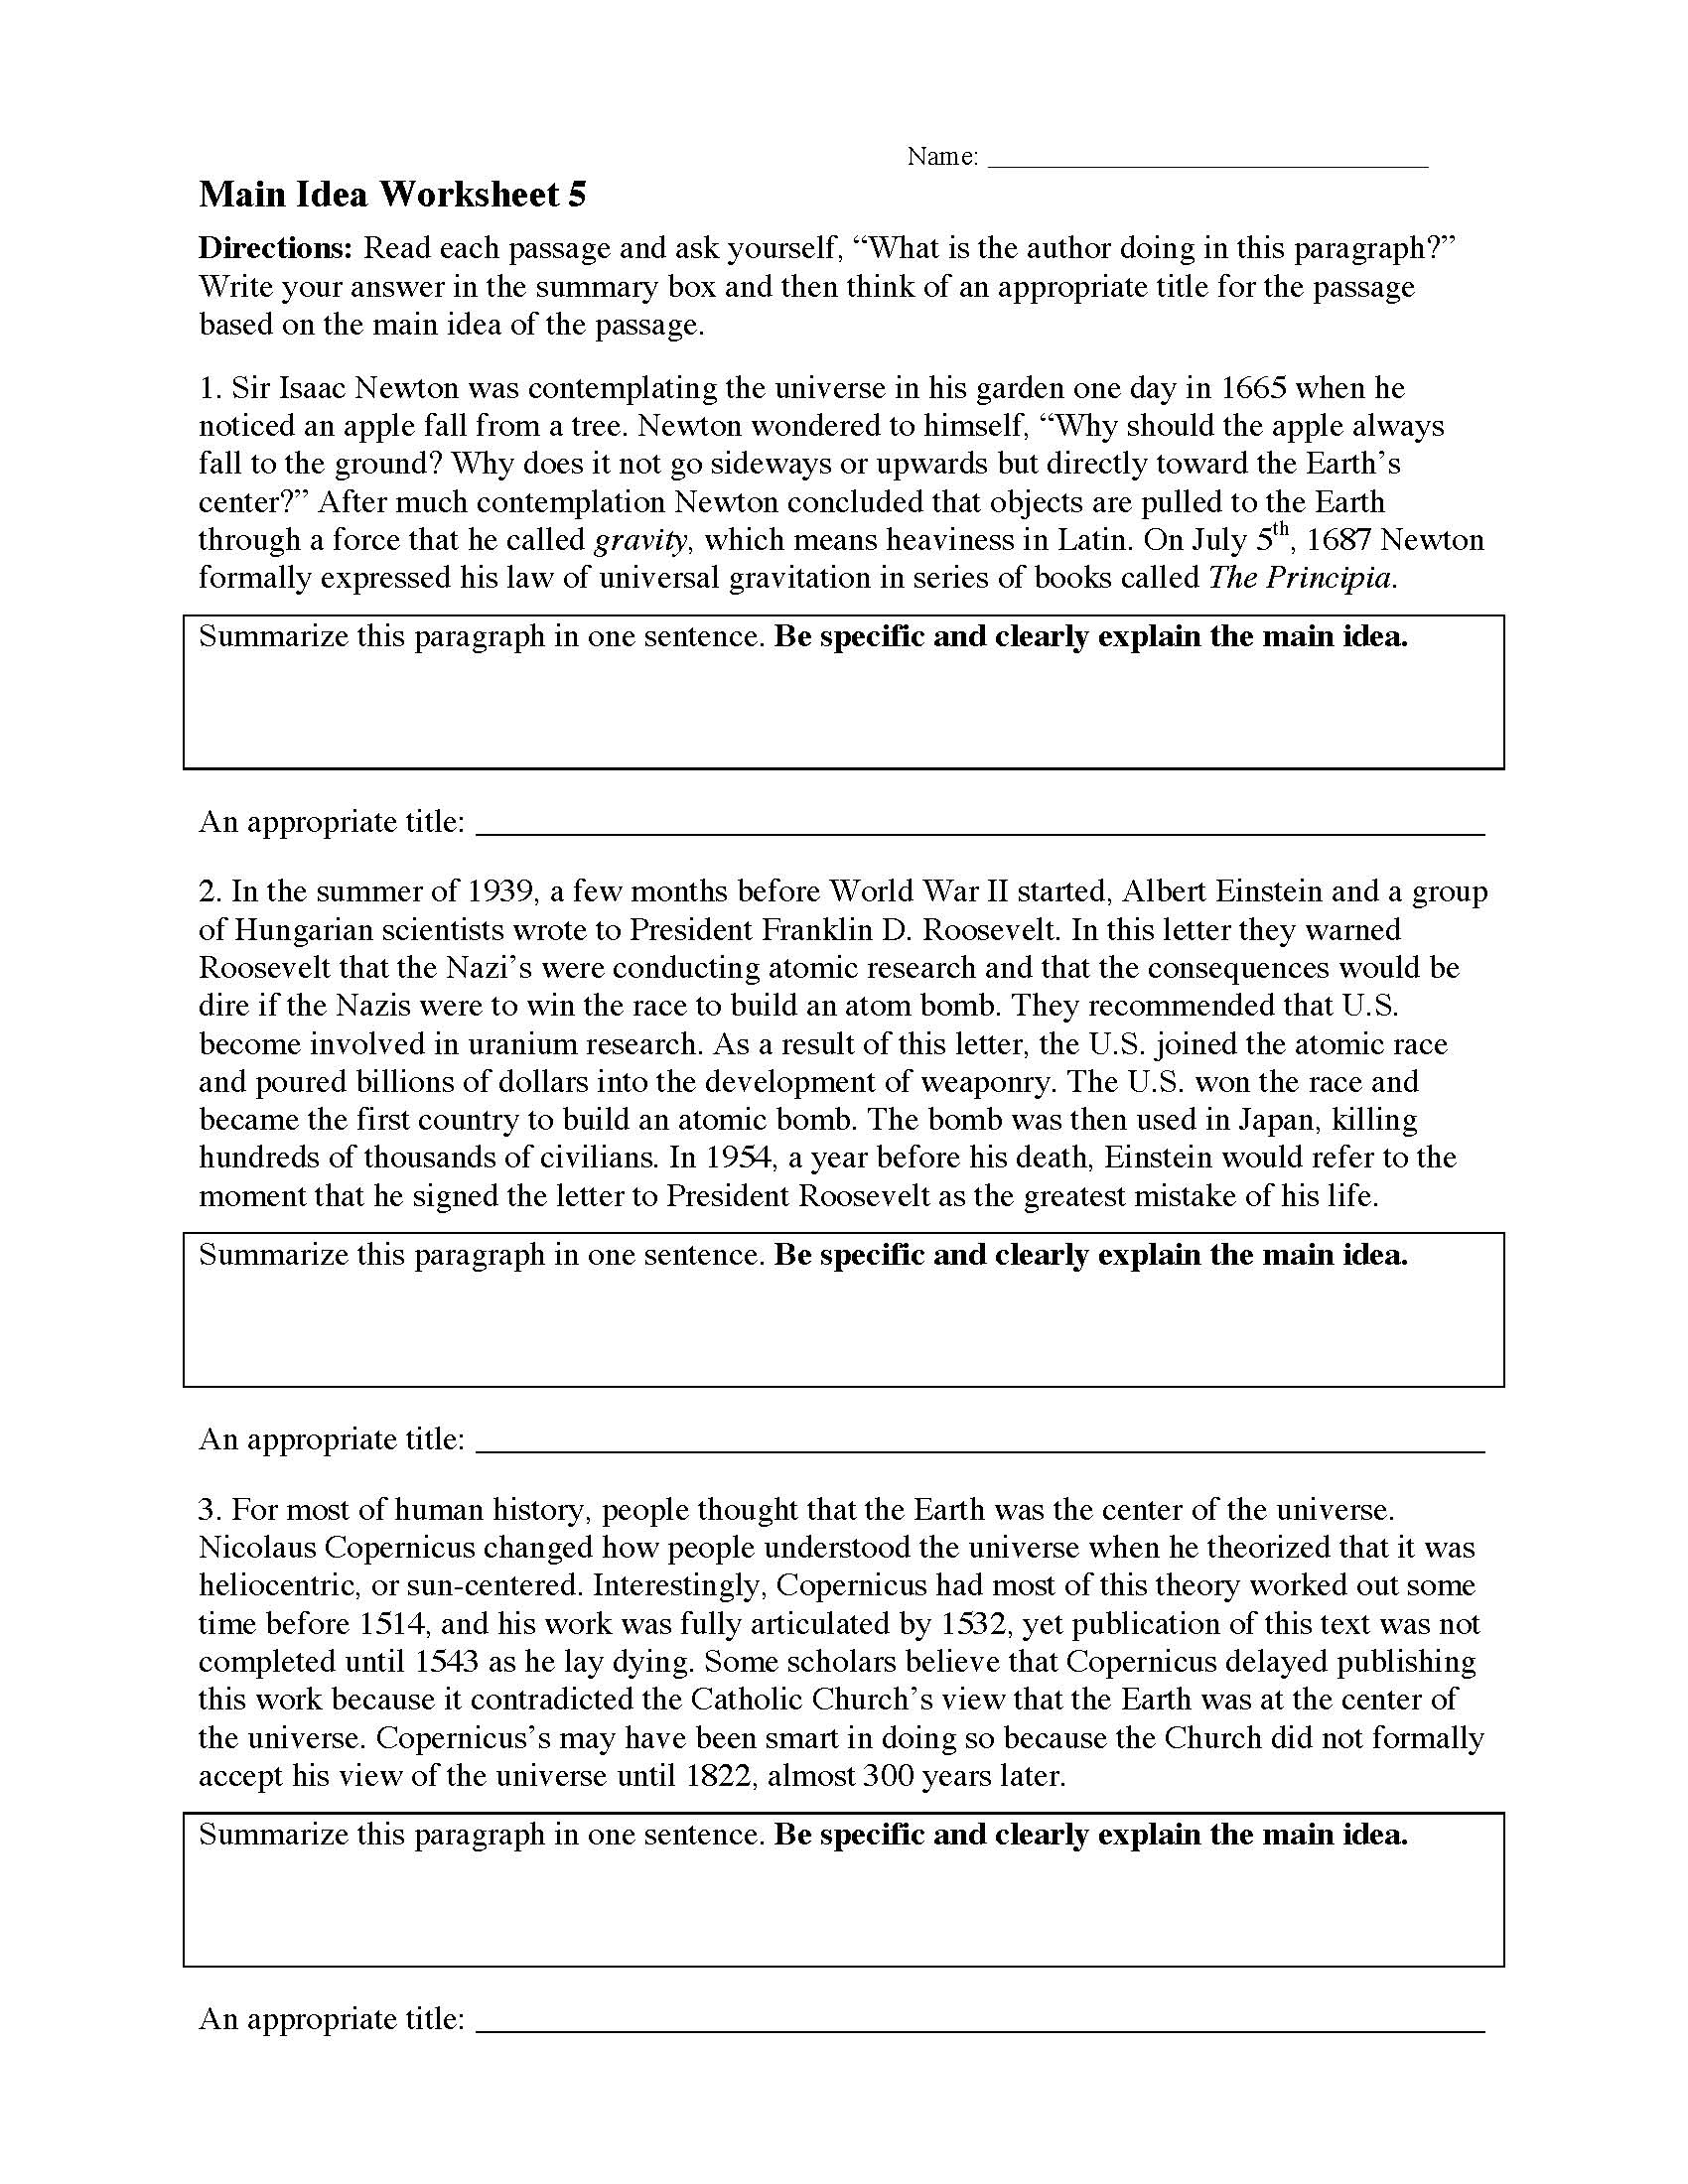 Main Idea Worksheets  Ereading Worksheets With Regard To Main Idea Worksheet 4